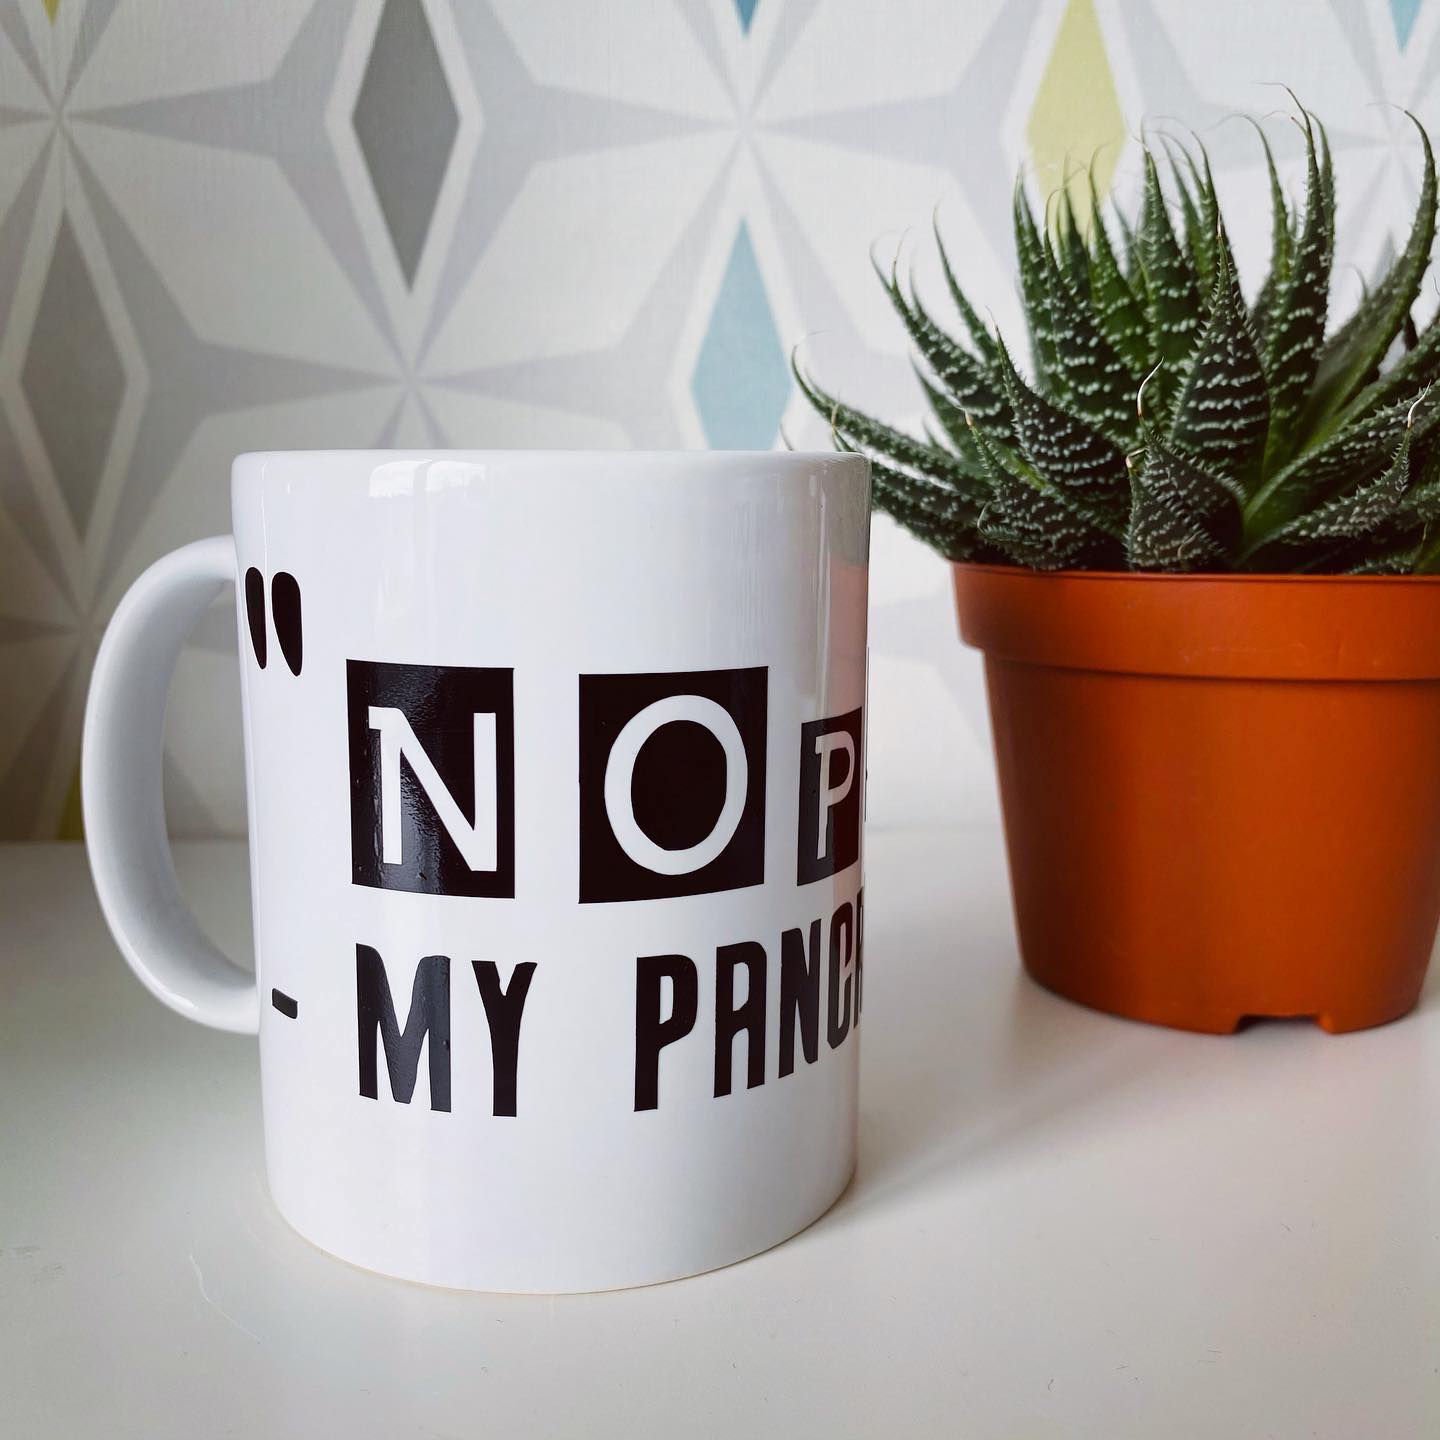 "Nope" - My Pancreas Mug/Cup